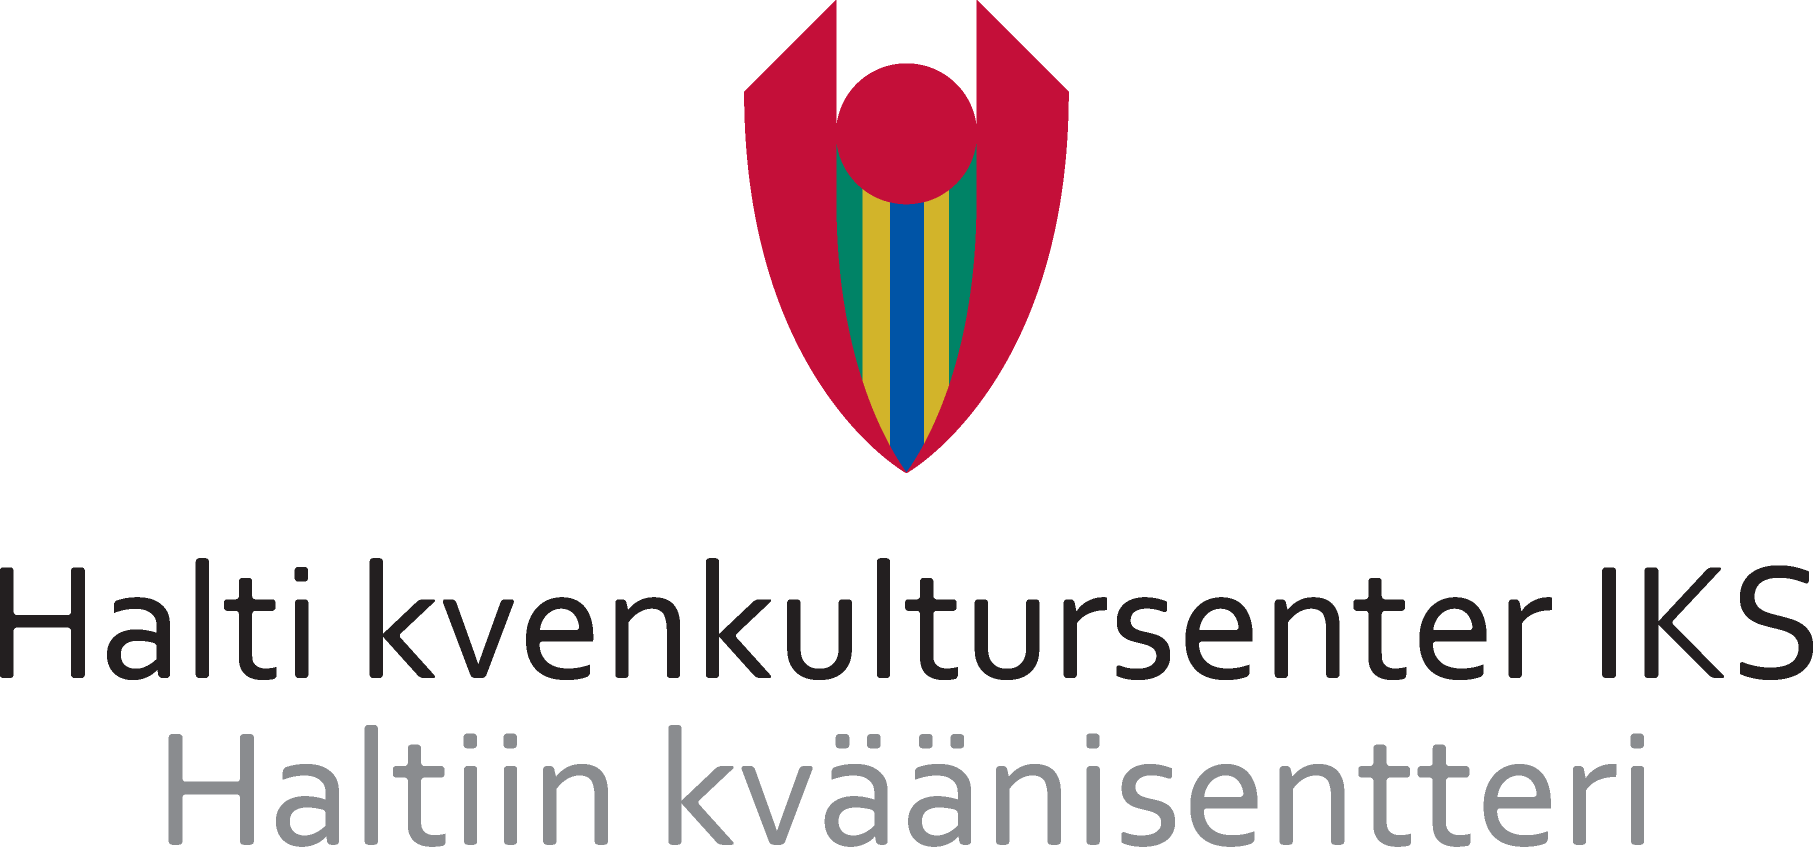 kvenkultursenteret logo.bmp